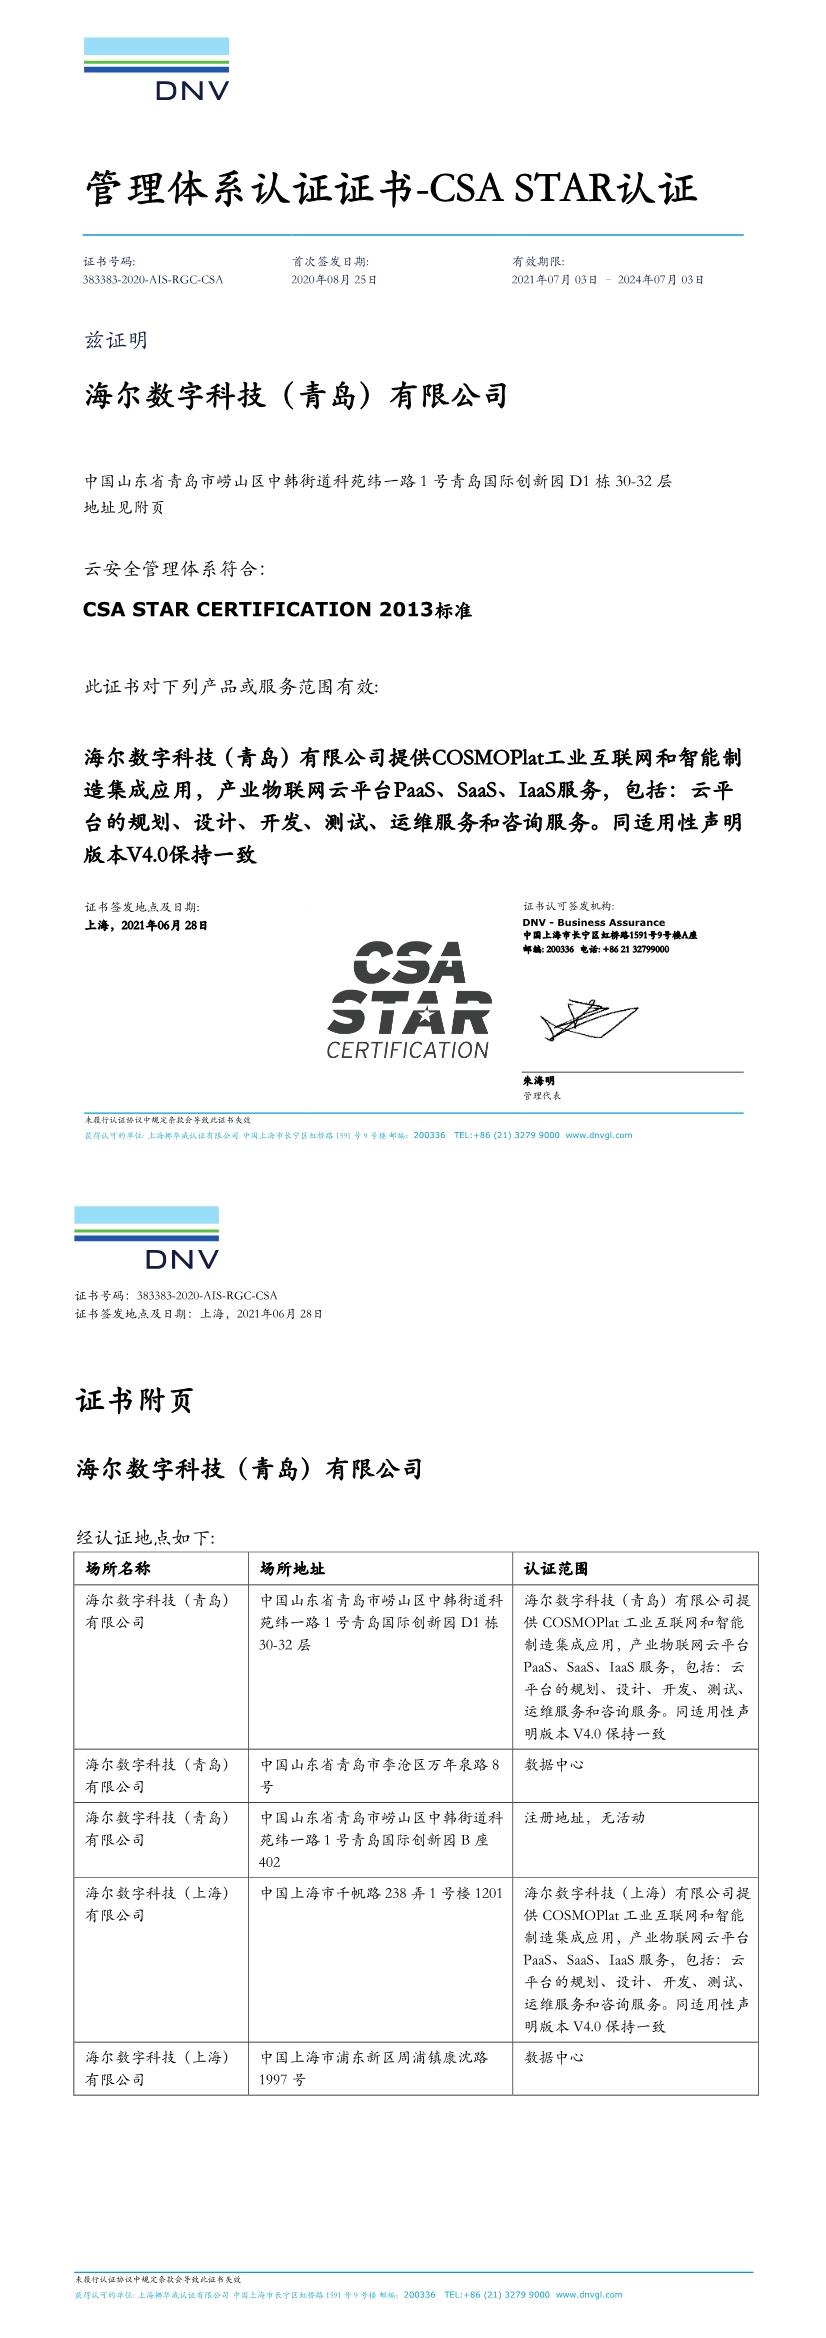 8.CSA STAR CERTIFICATION 2013云安全管理体系.jpg